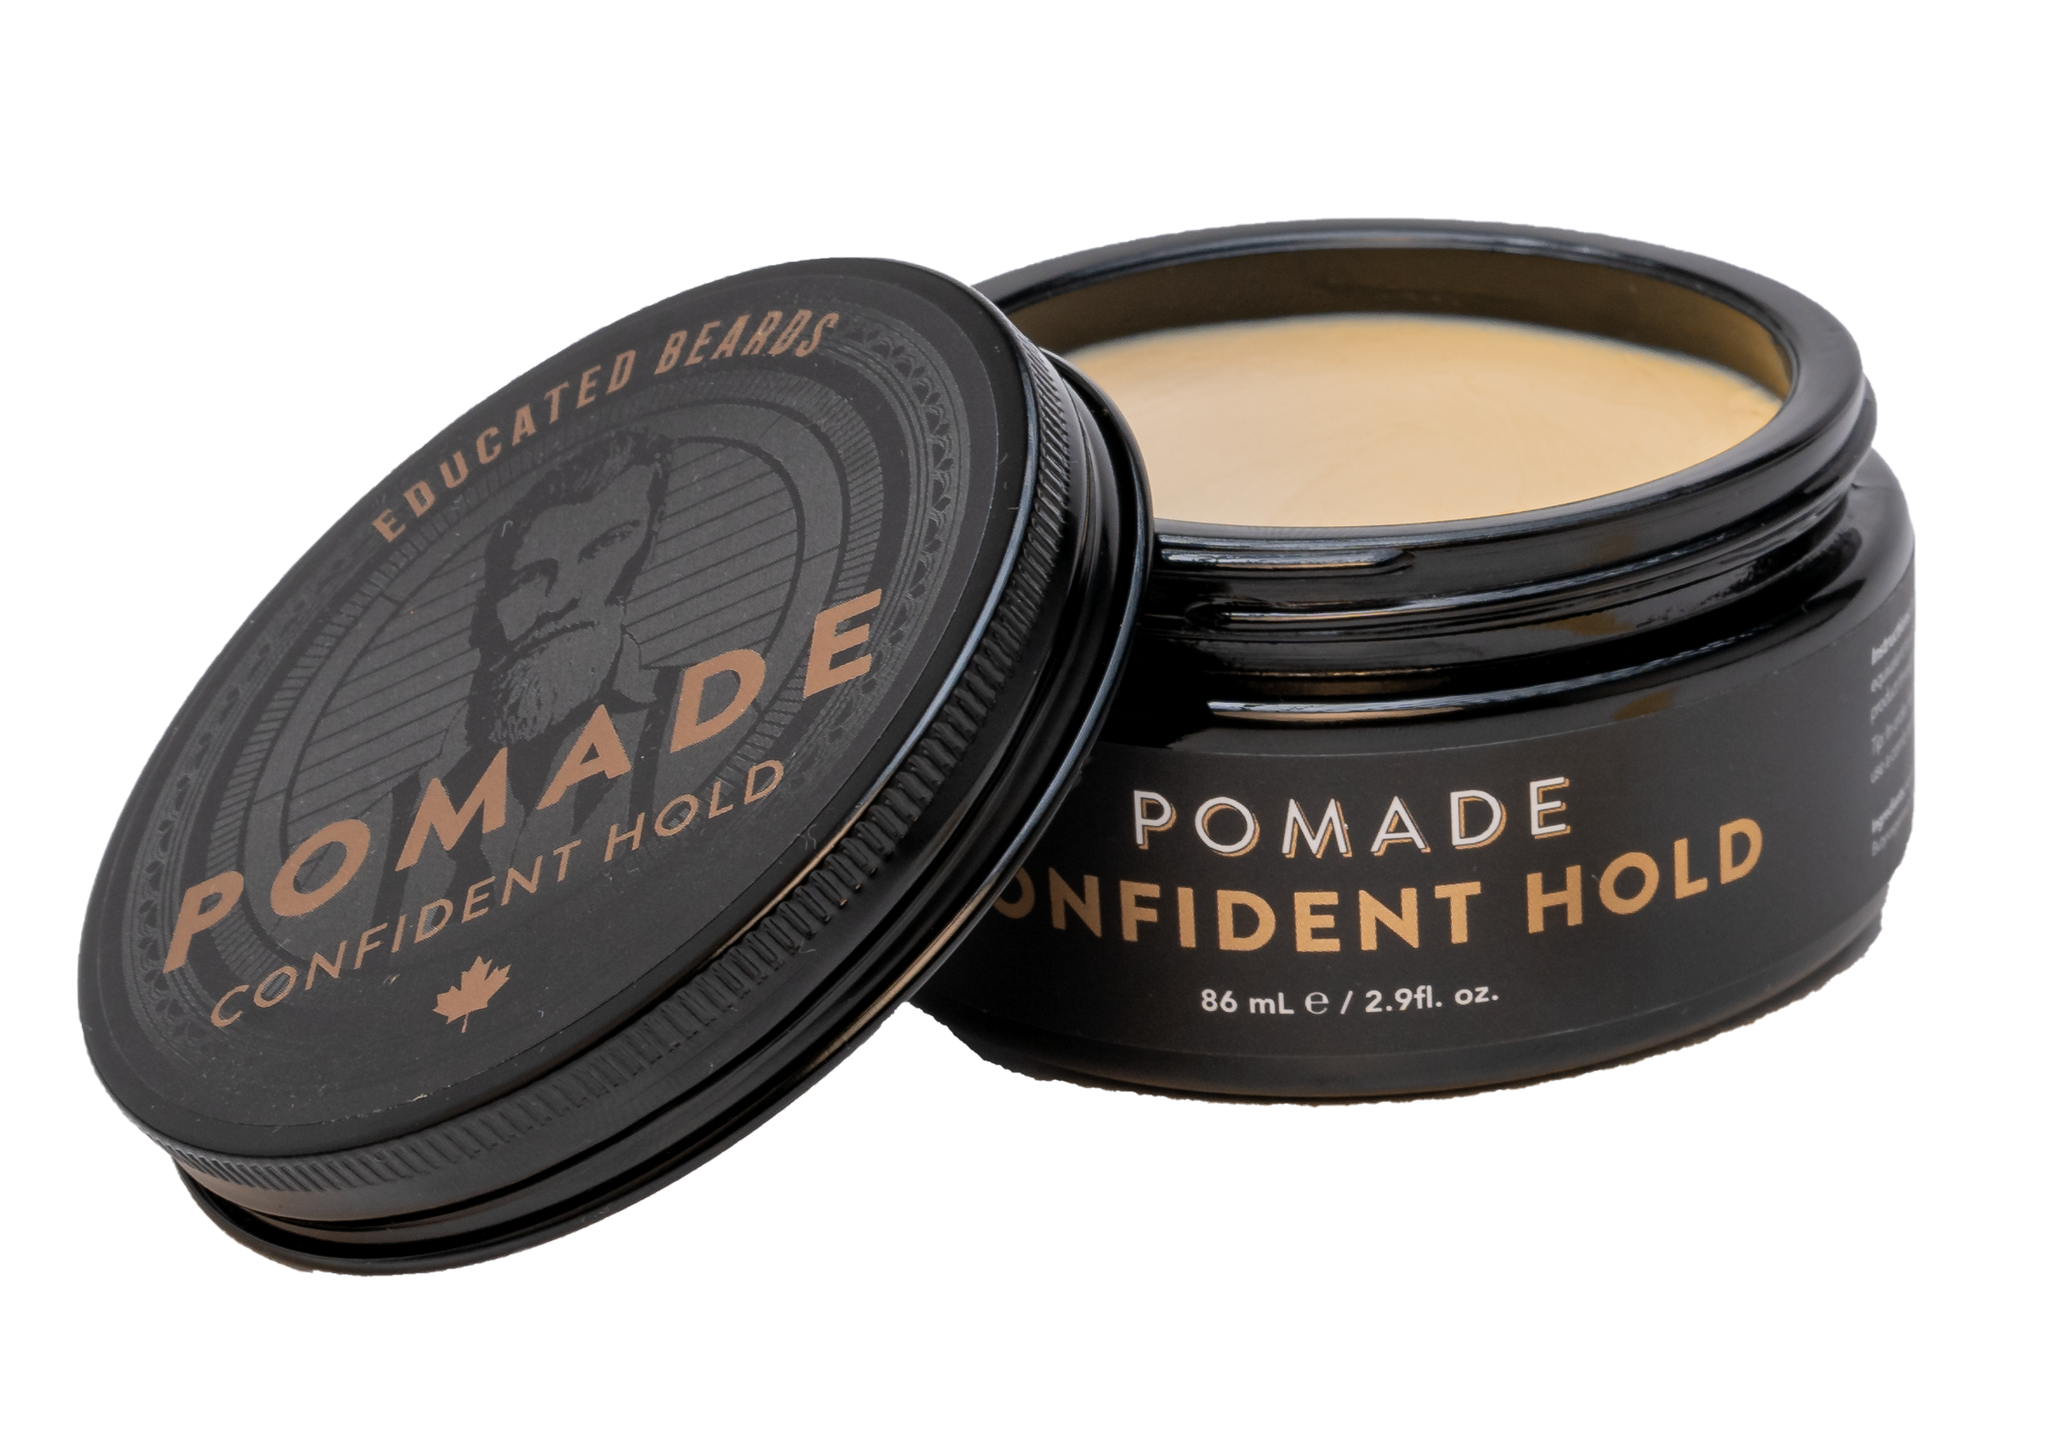 Confident Hold Pomade inside glass jar | Educated Beards